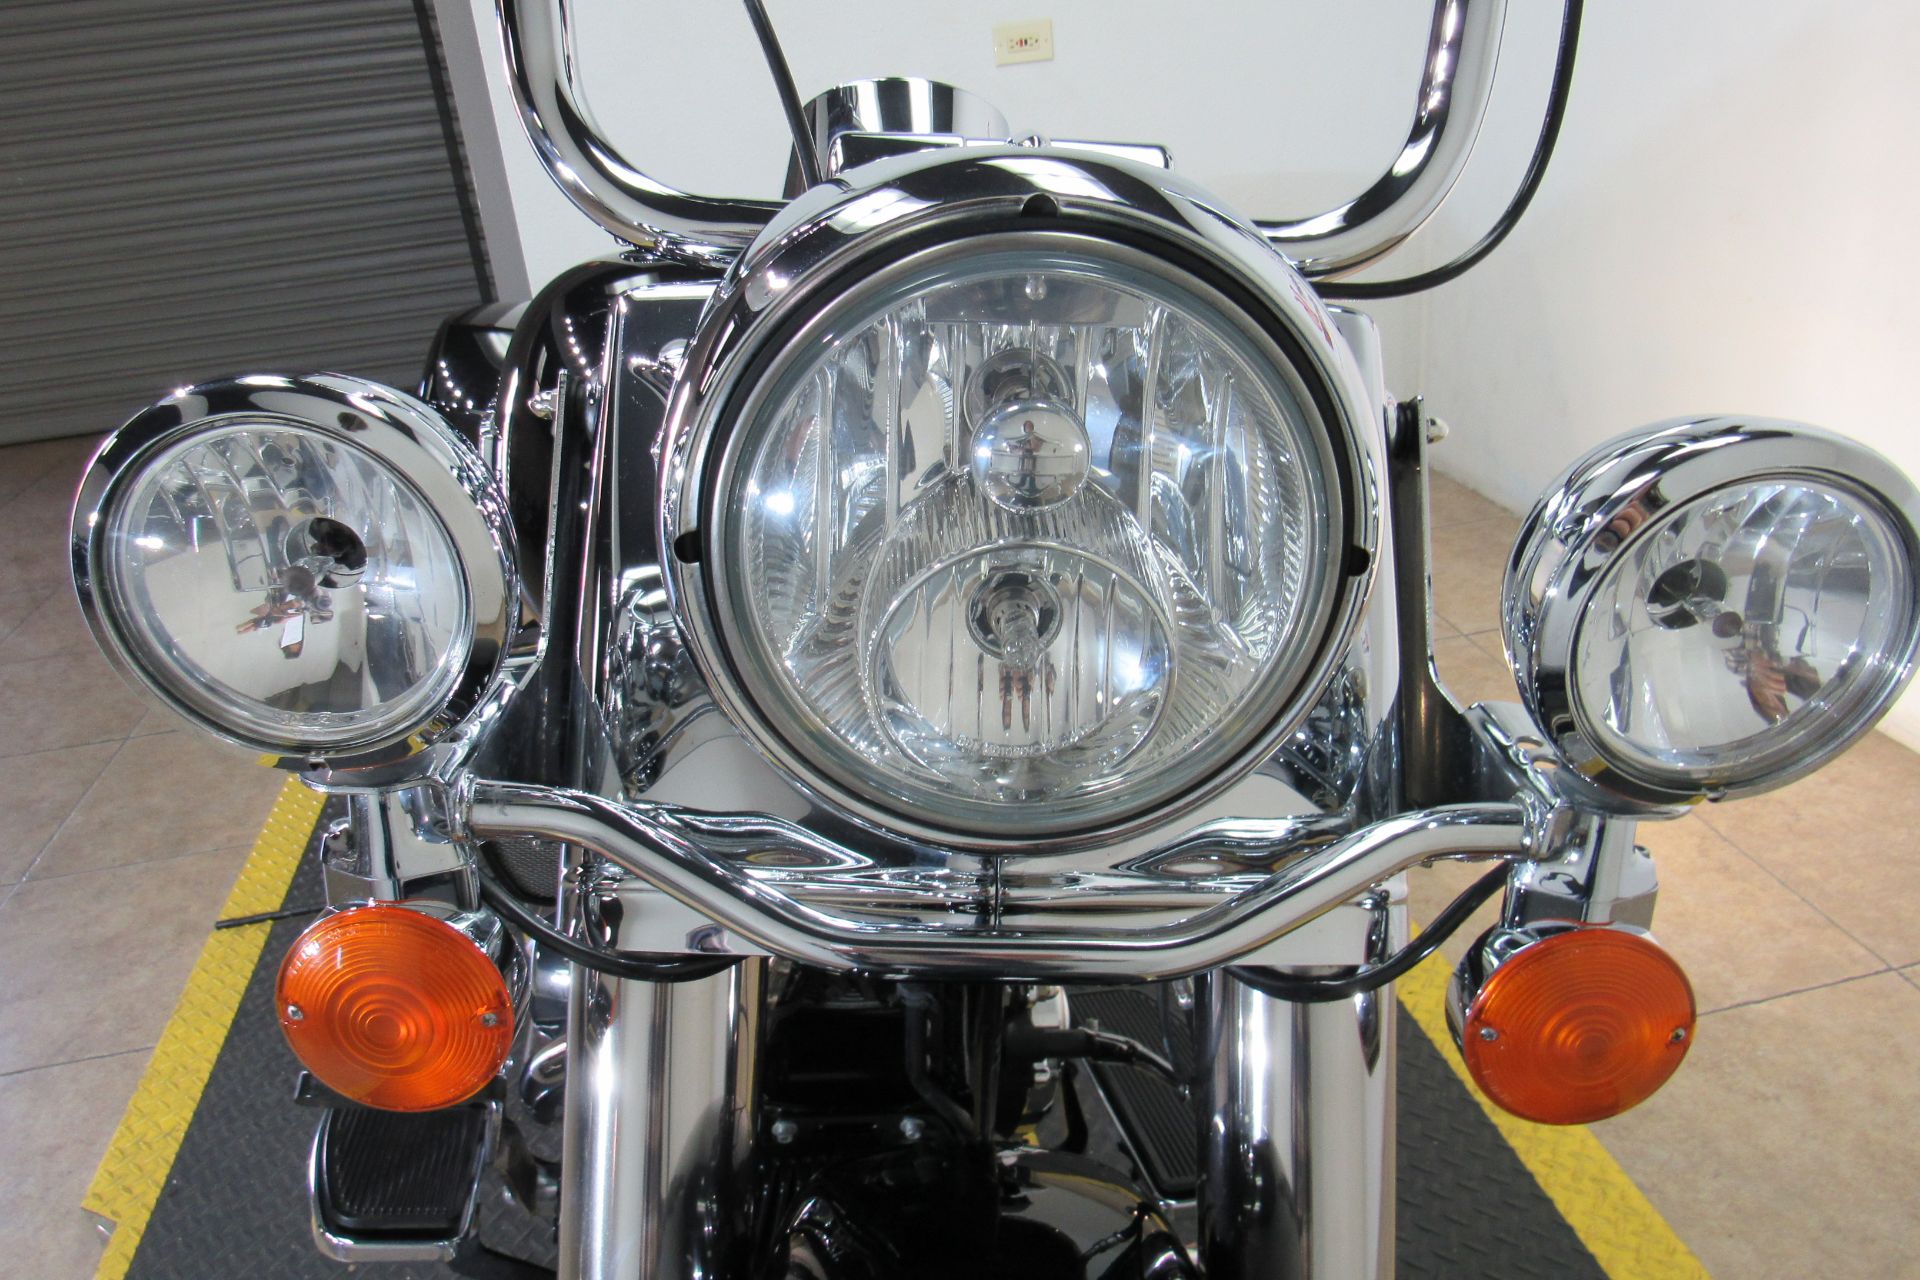 2020 Harley-Davidson Road King® in Temecula, California - Photo 10